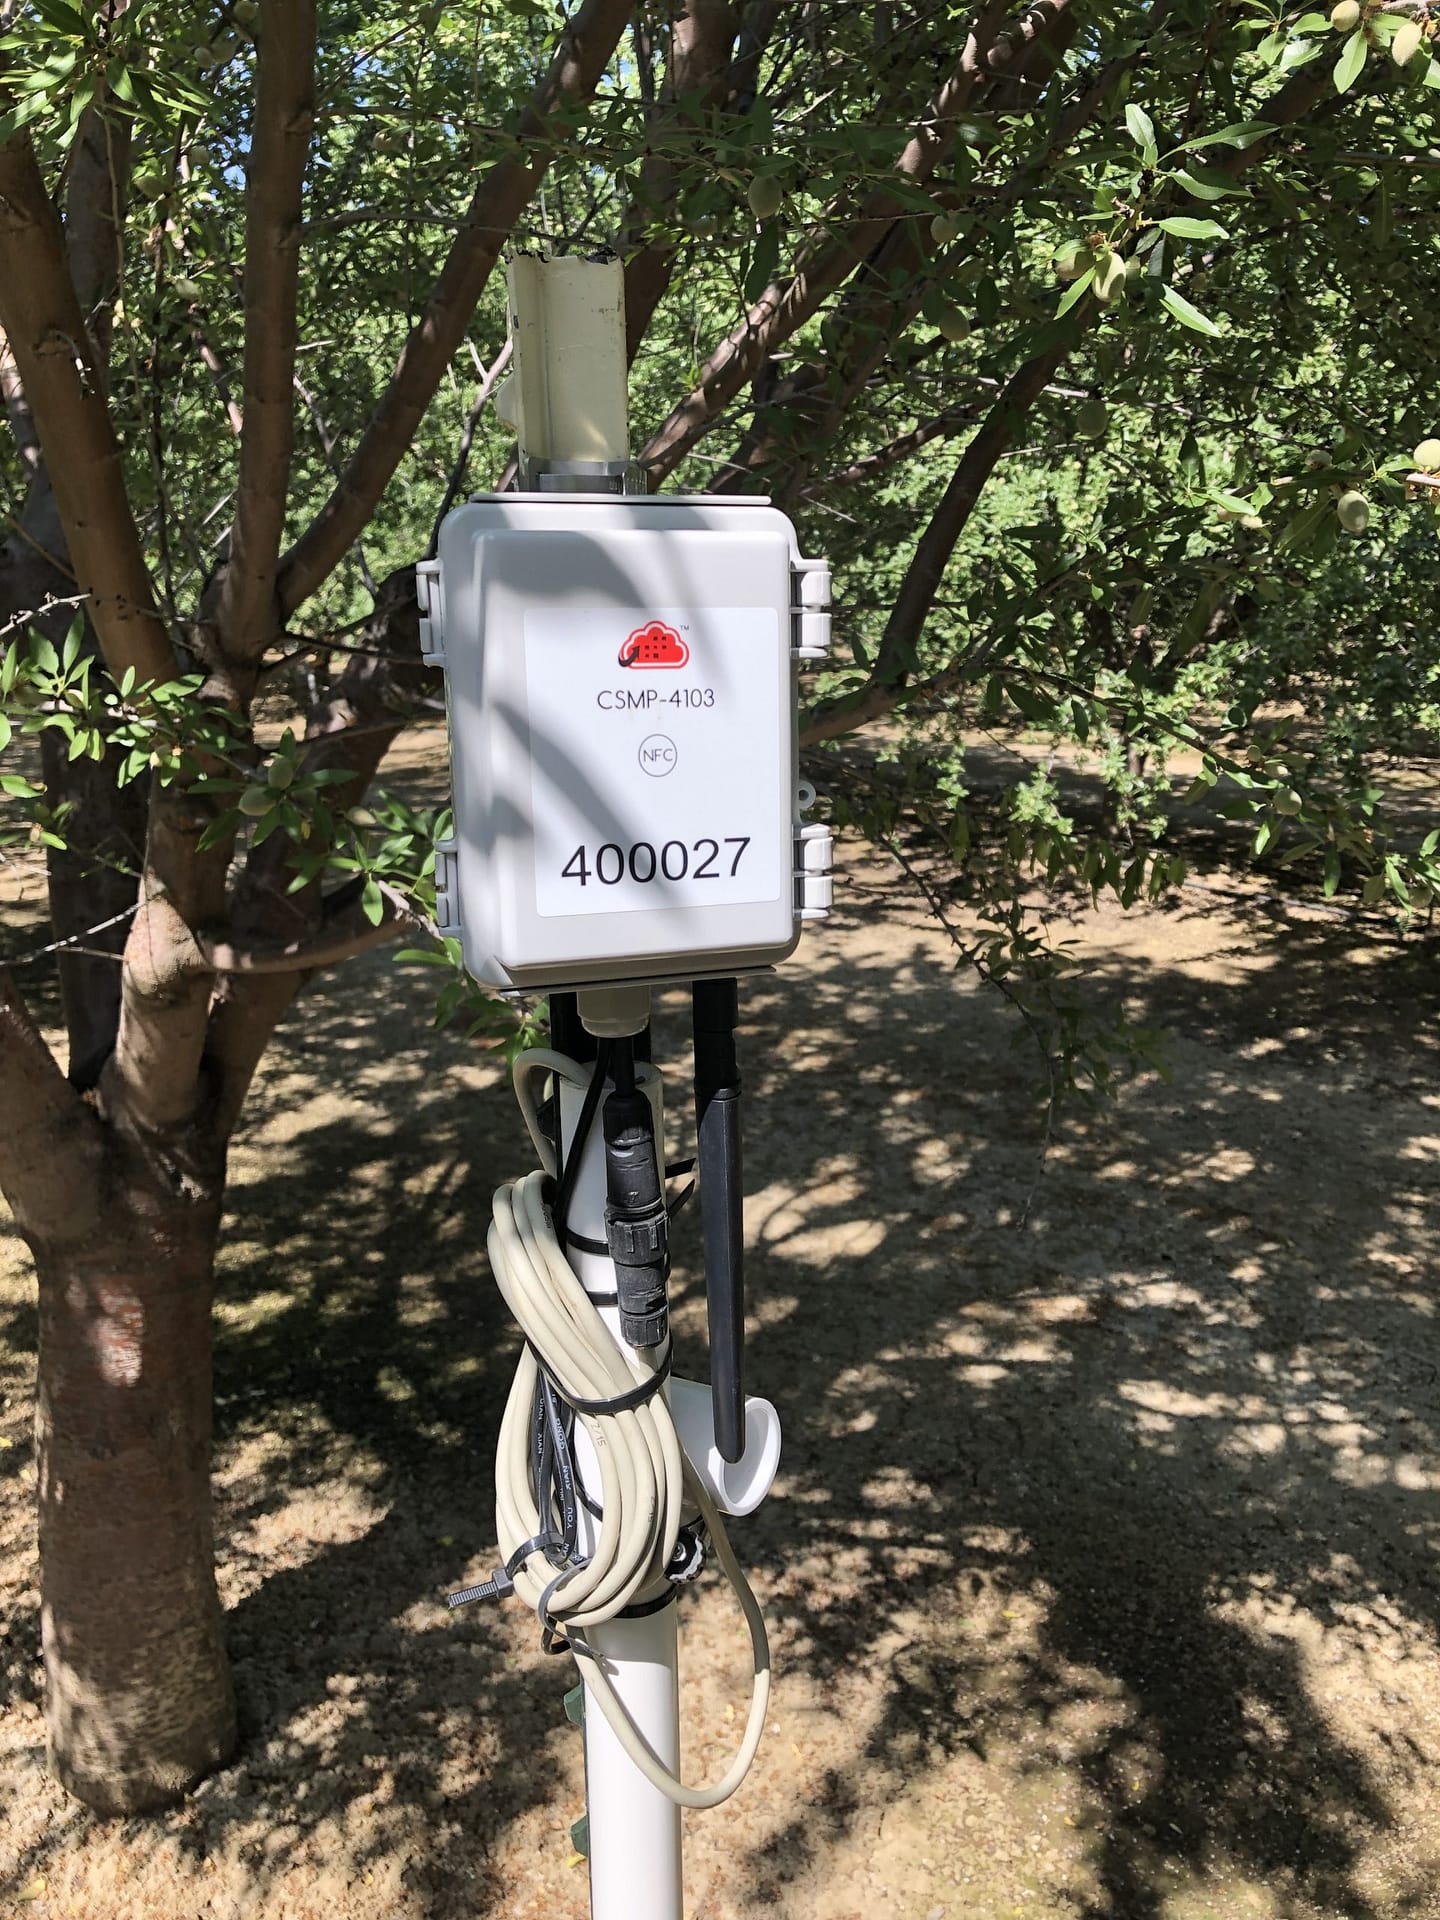 Zenseio Orchard Soil Moisture Monitoring